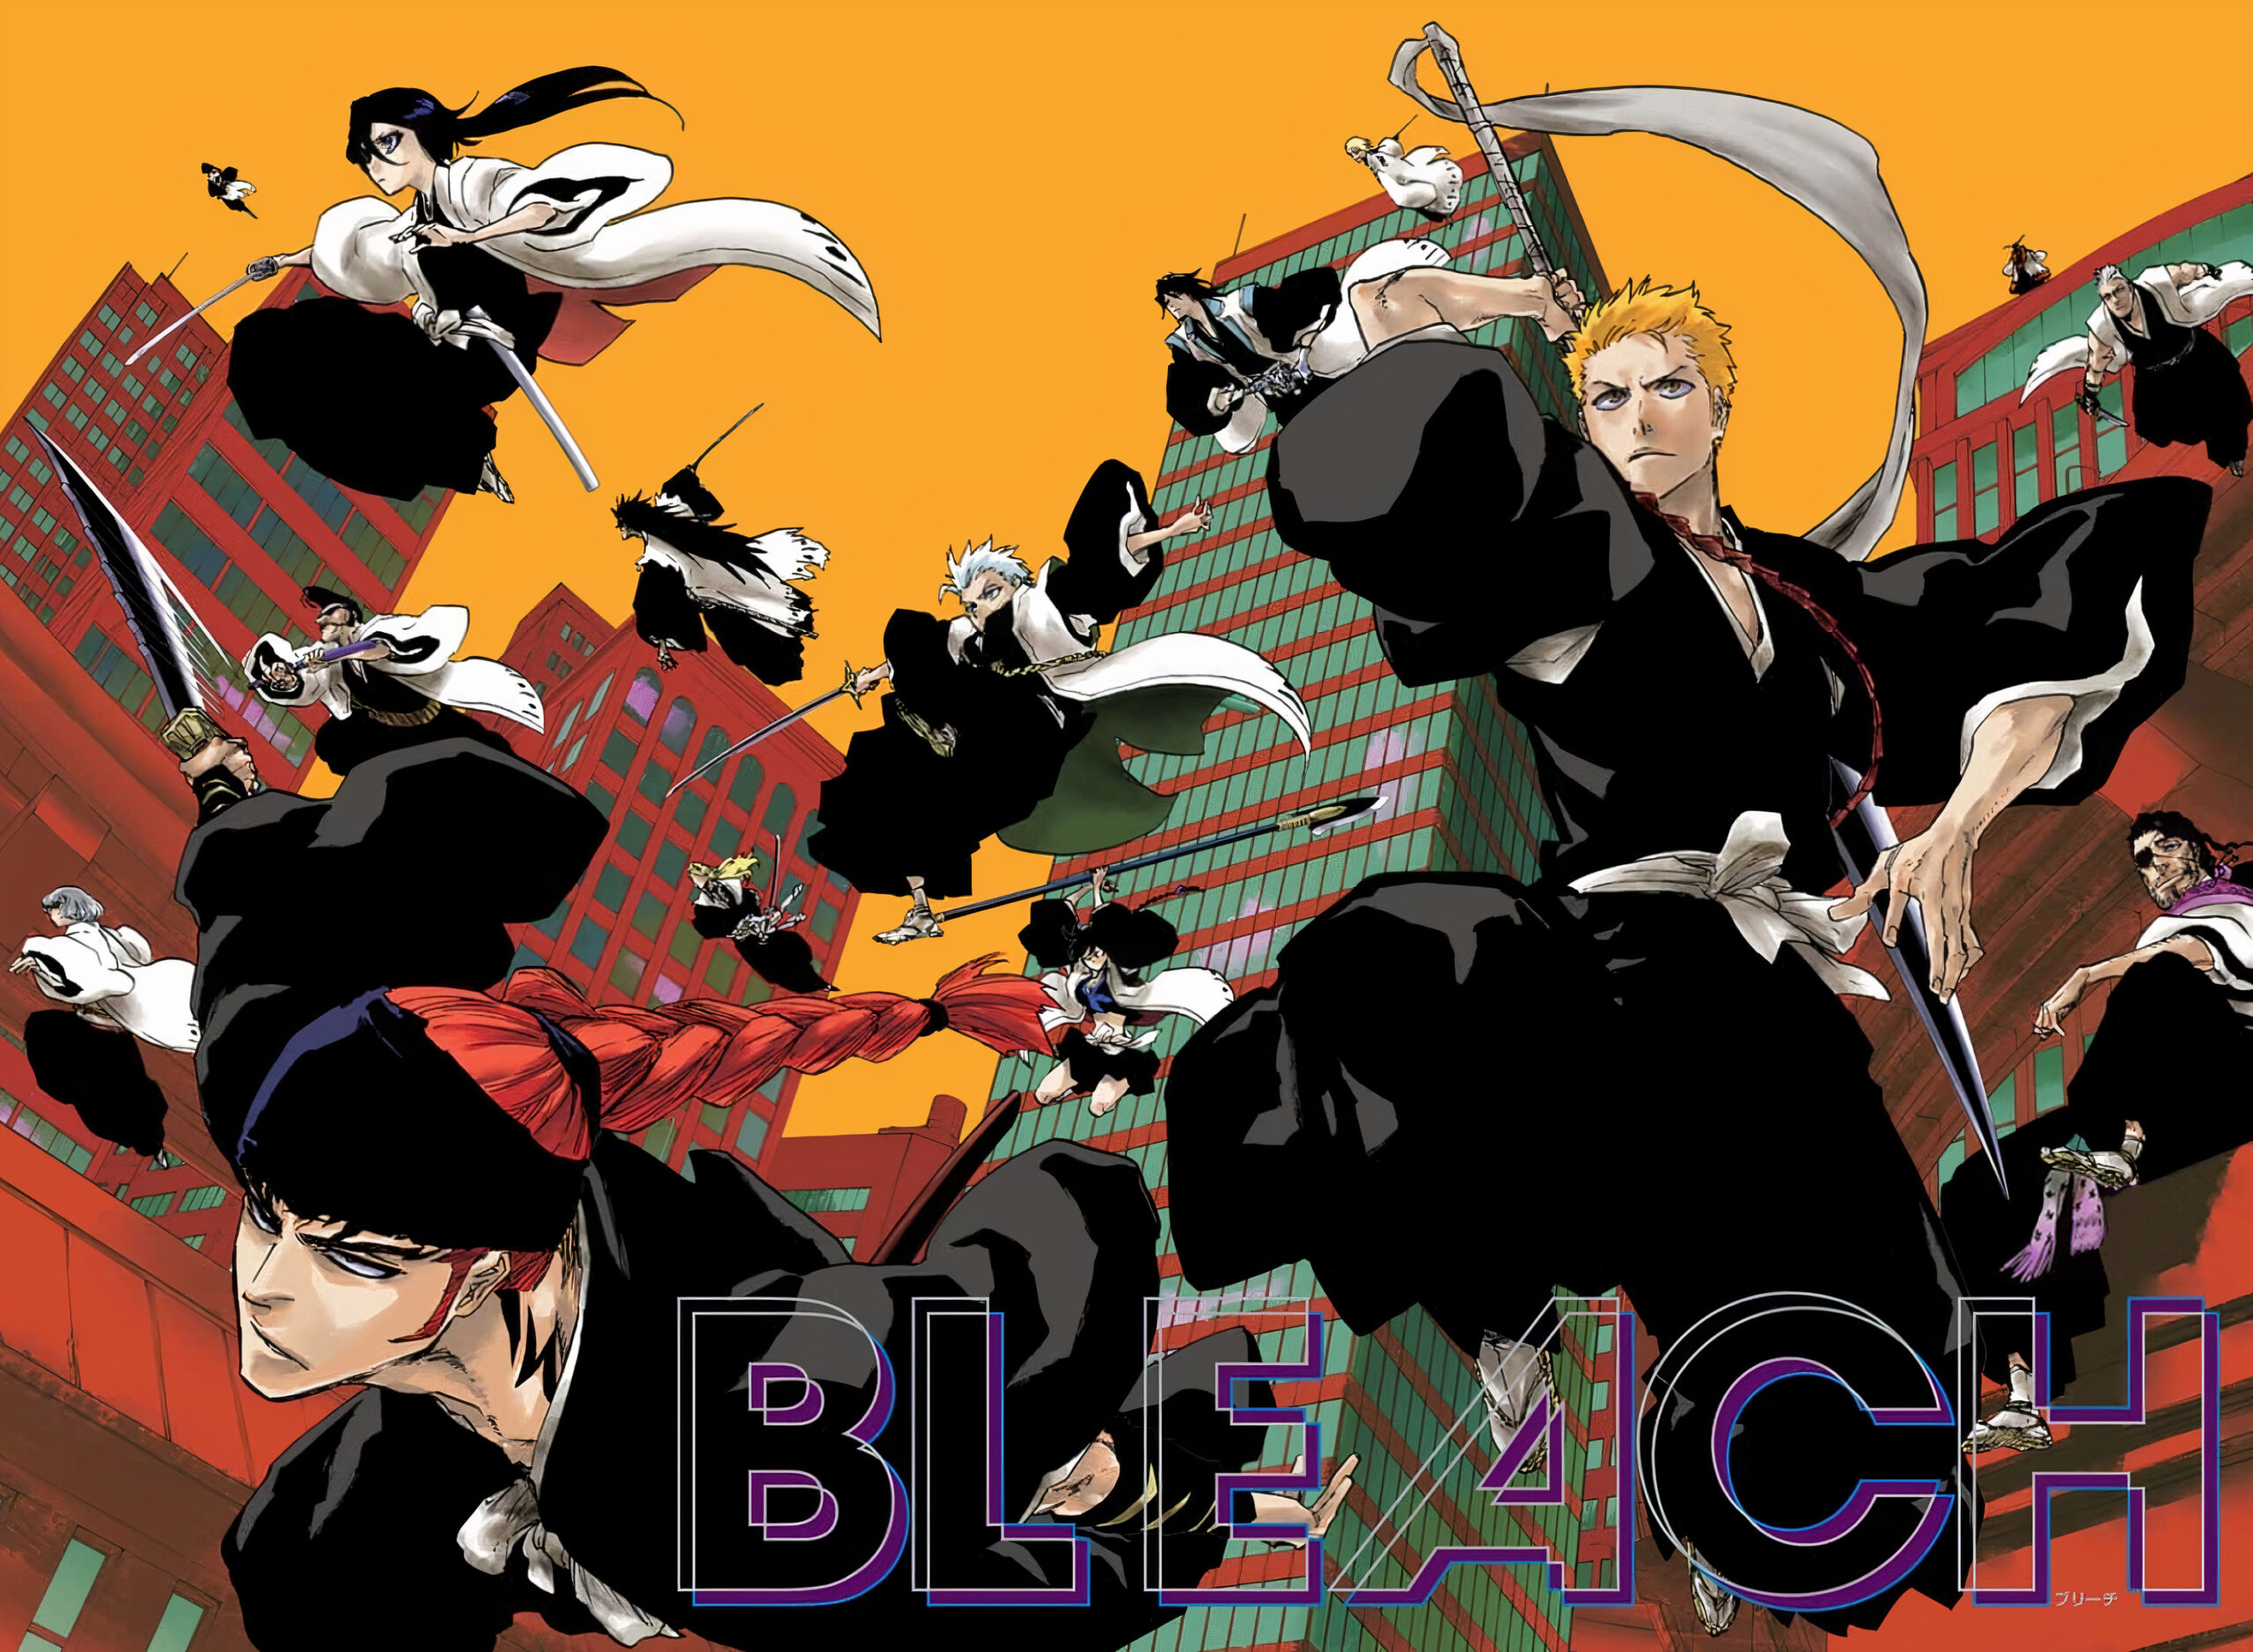 Bleach' (2001-2016): Ichigo Kurosaki's Strength In His Desire To